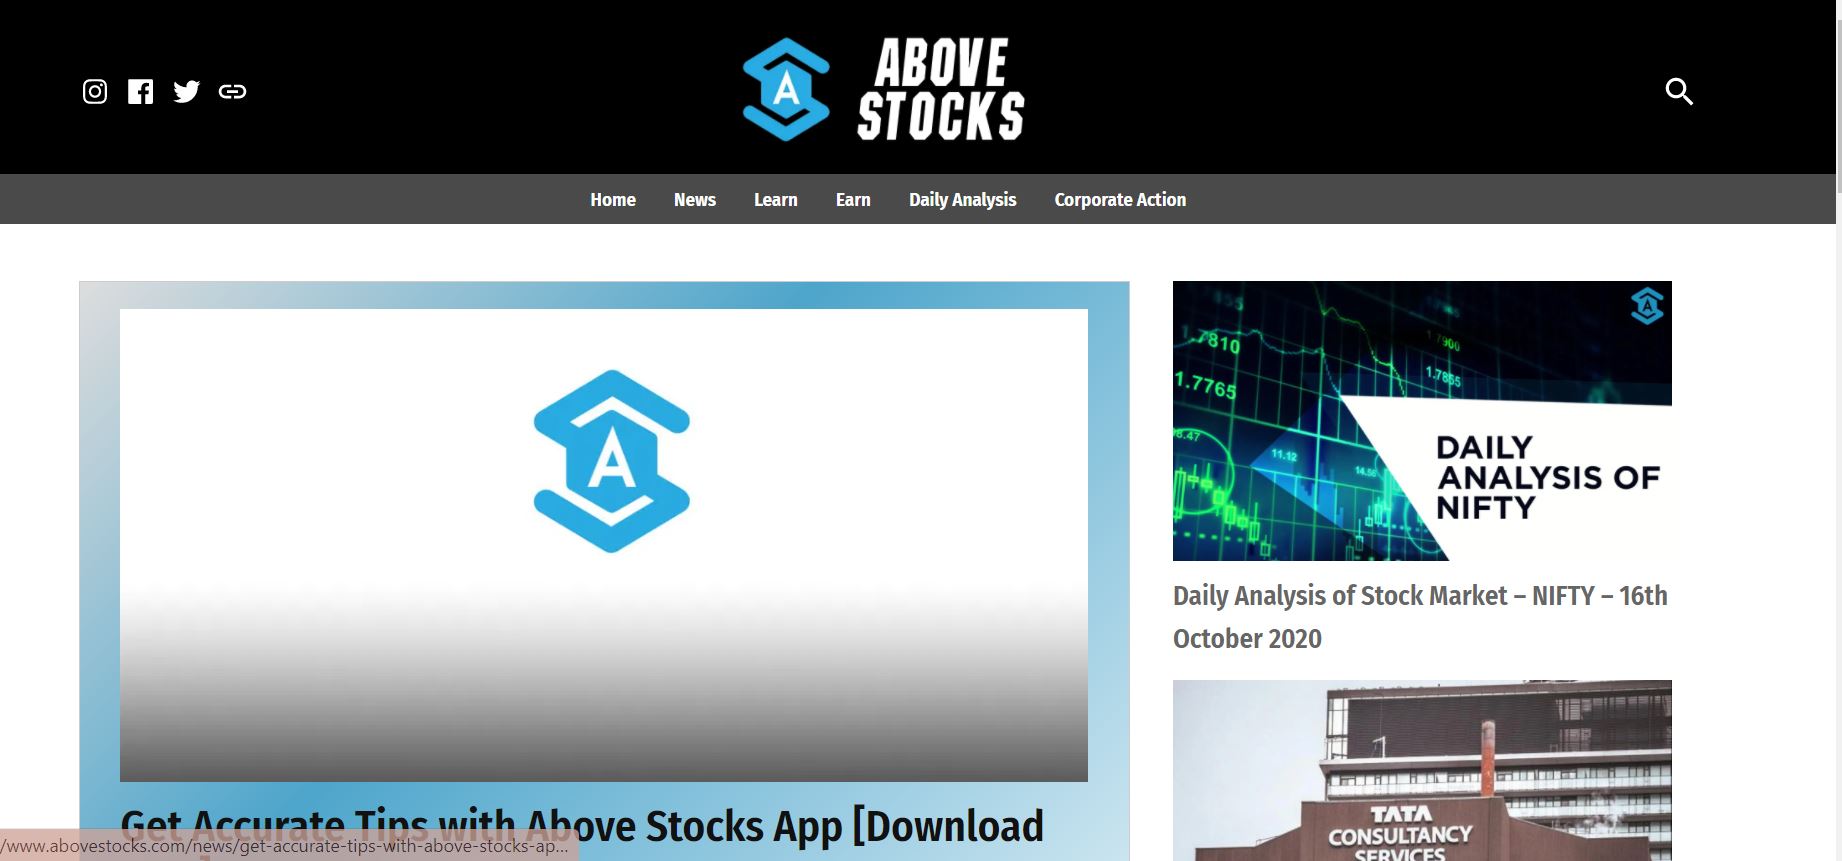 Above Stocks